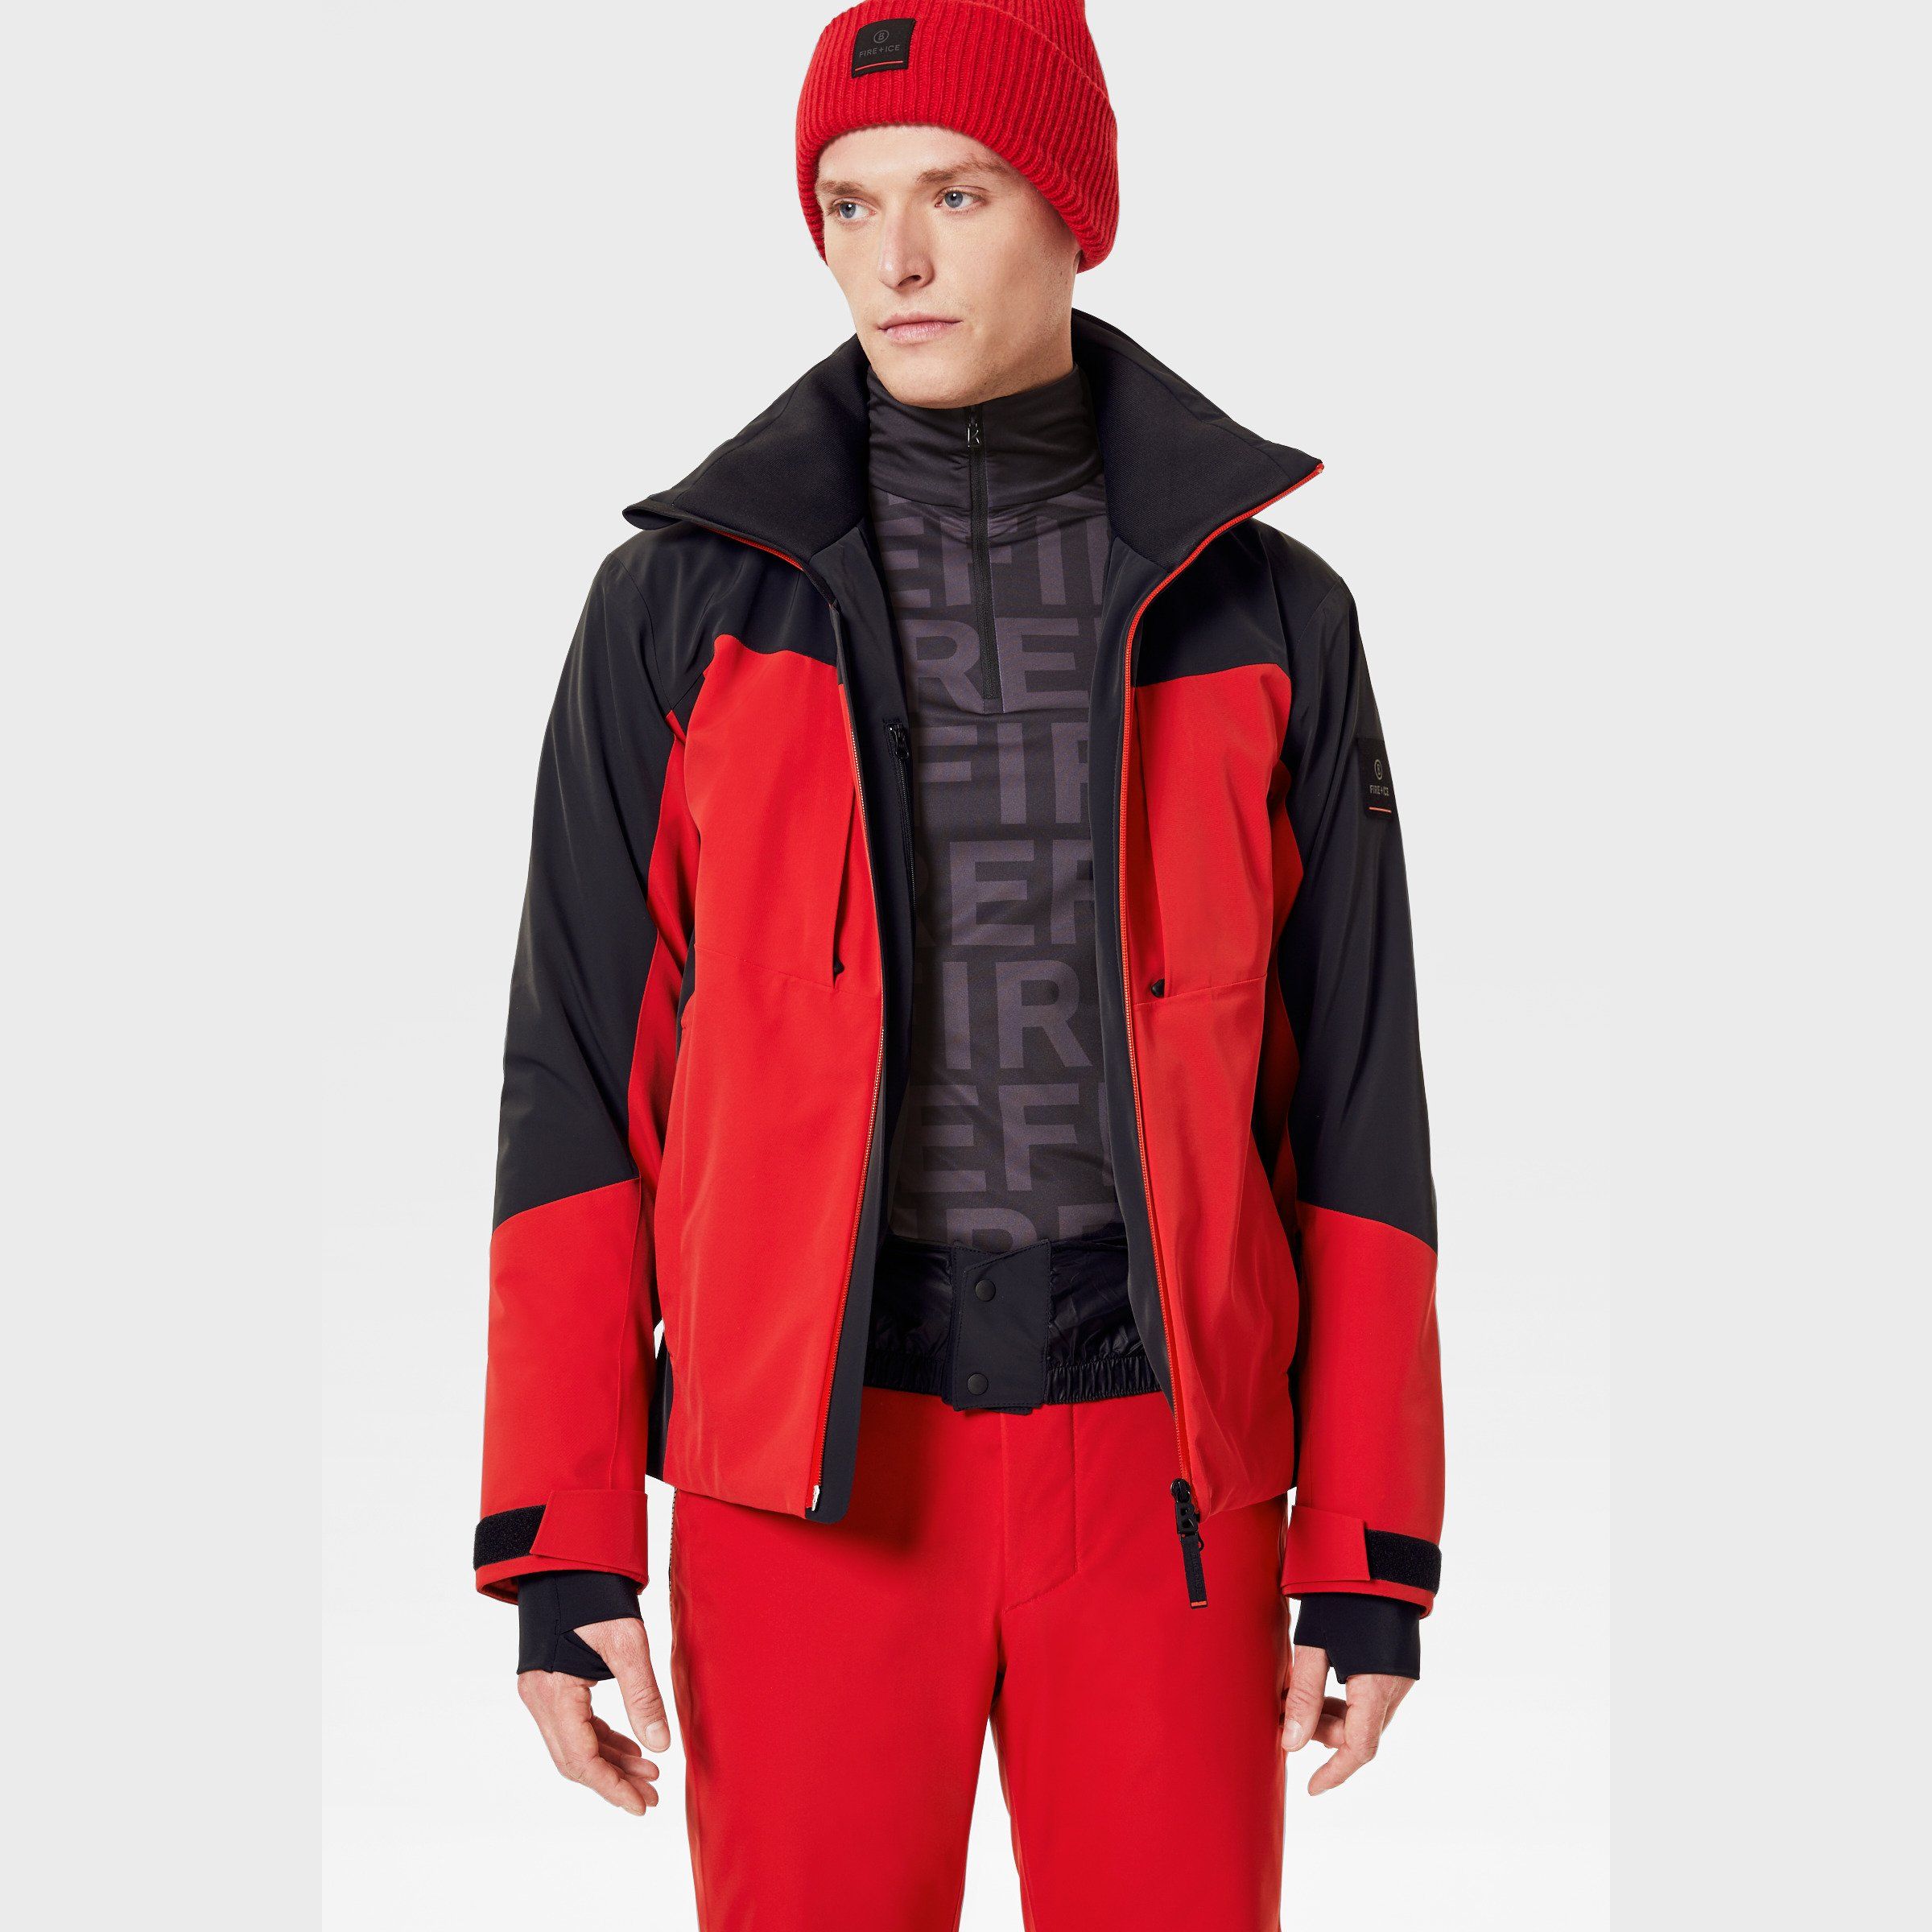 Geci Ski & Snow -  bogner fire and ice CARTER Ski Jacket